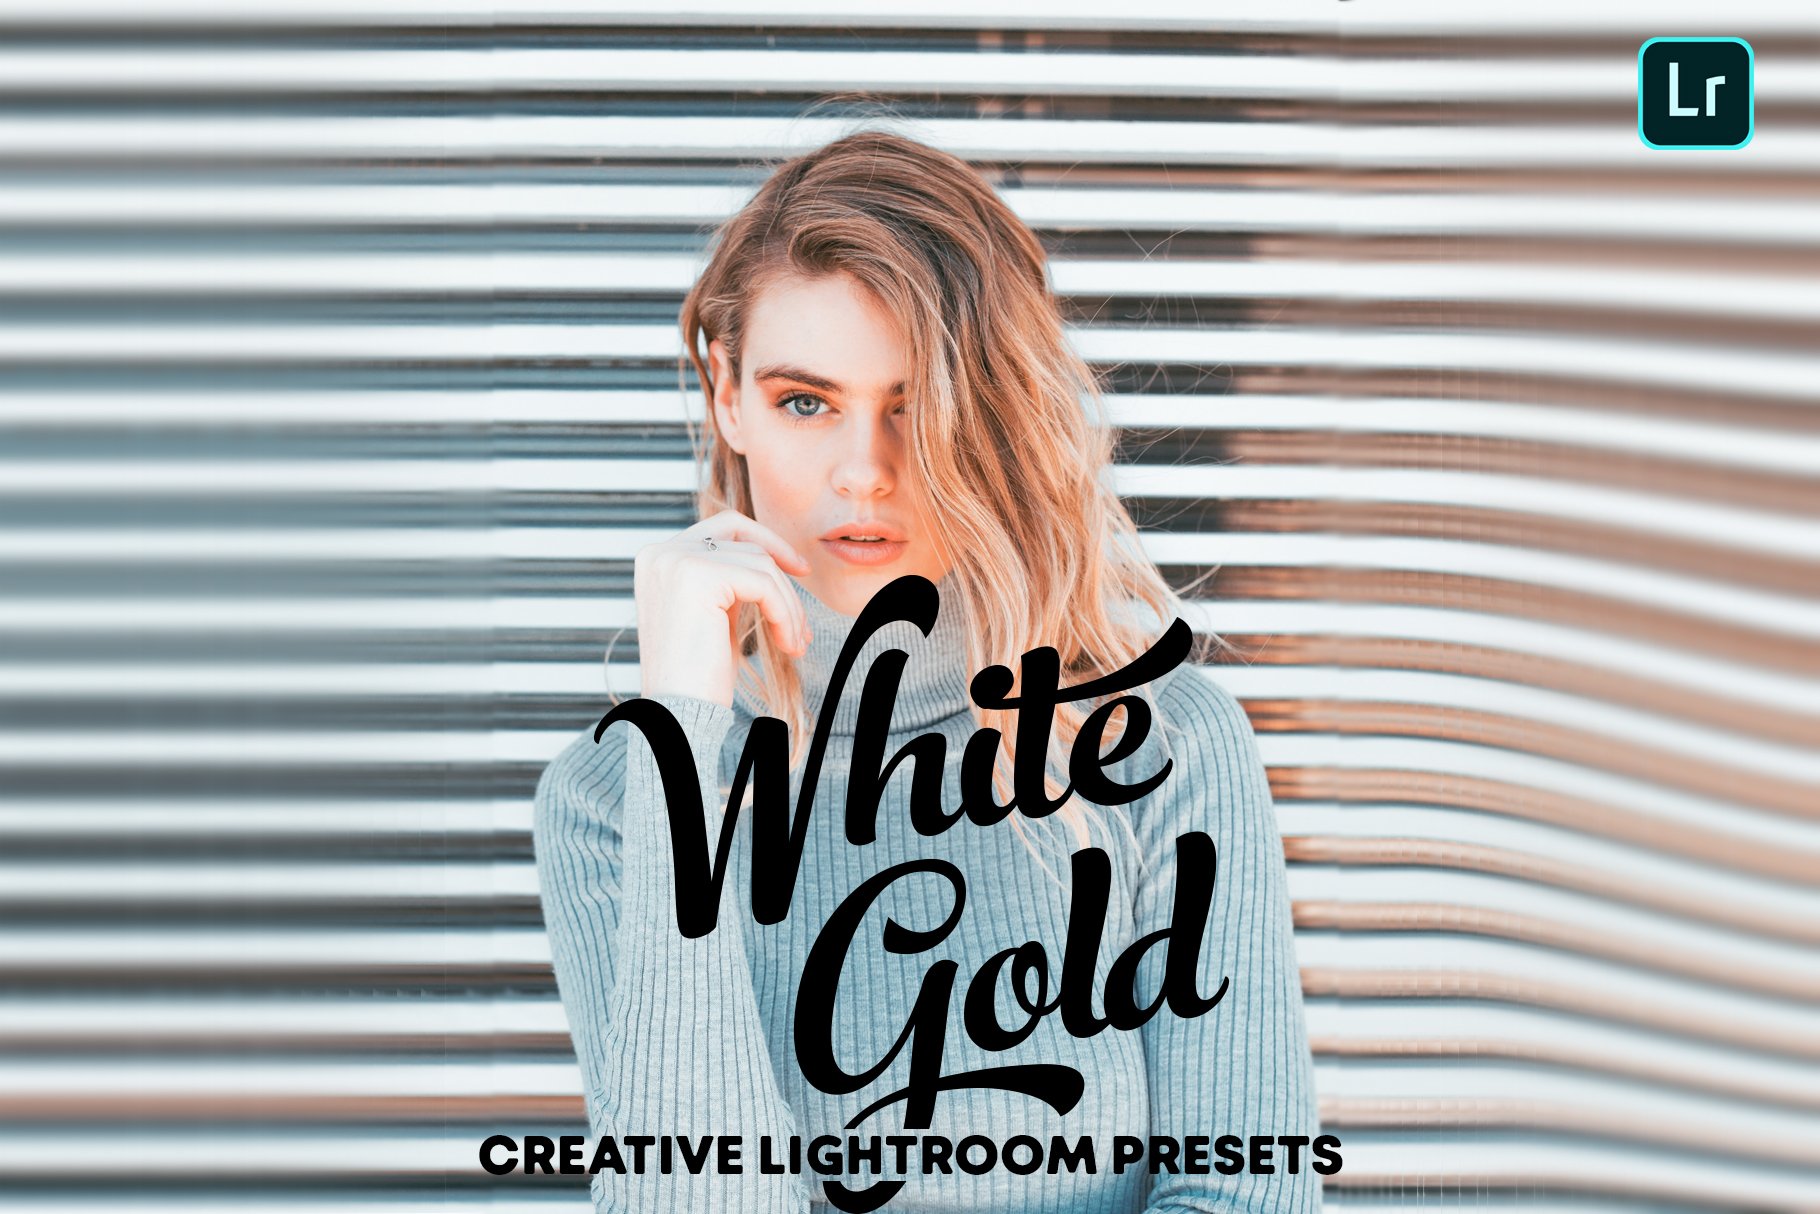 White Gold - Lightroom Presetscover image.